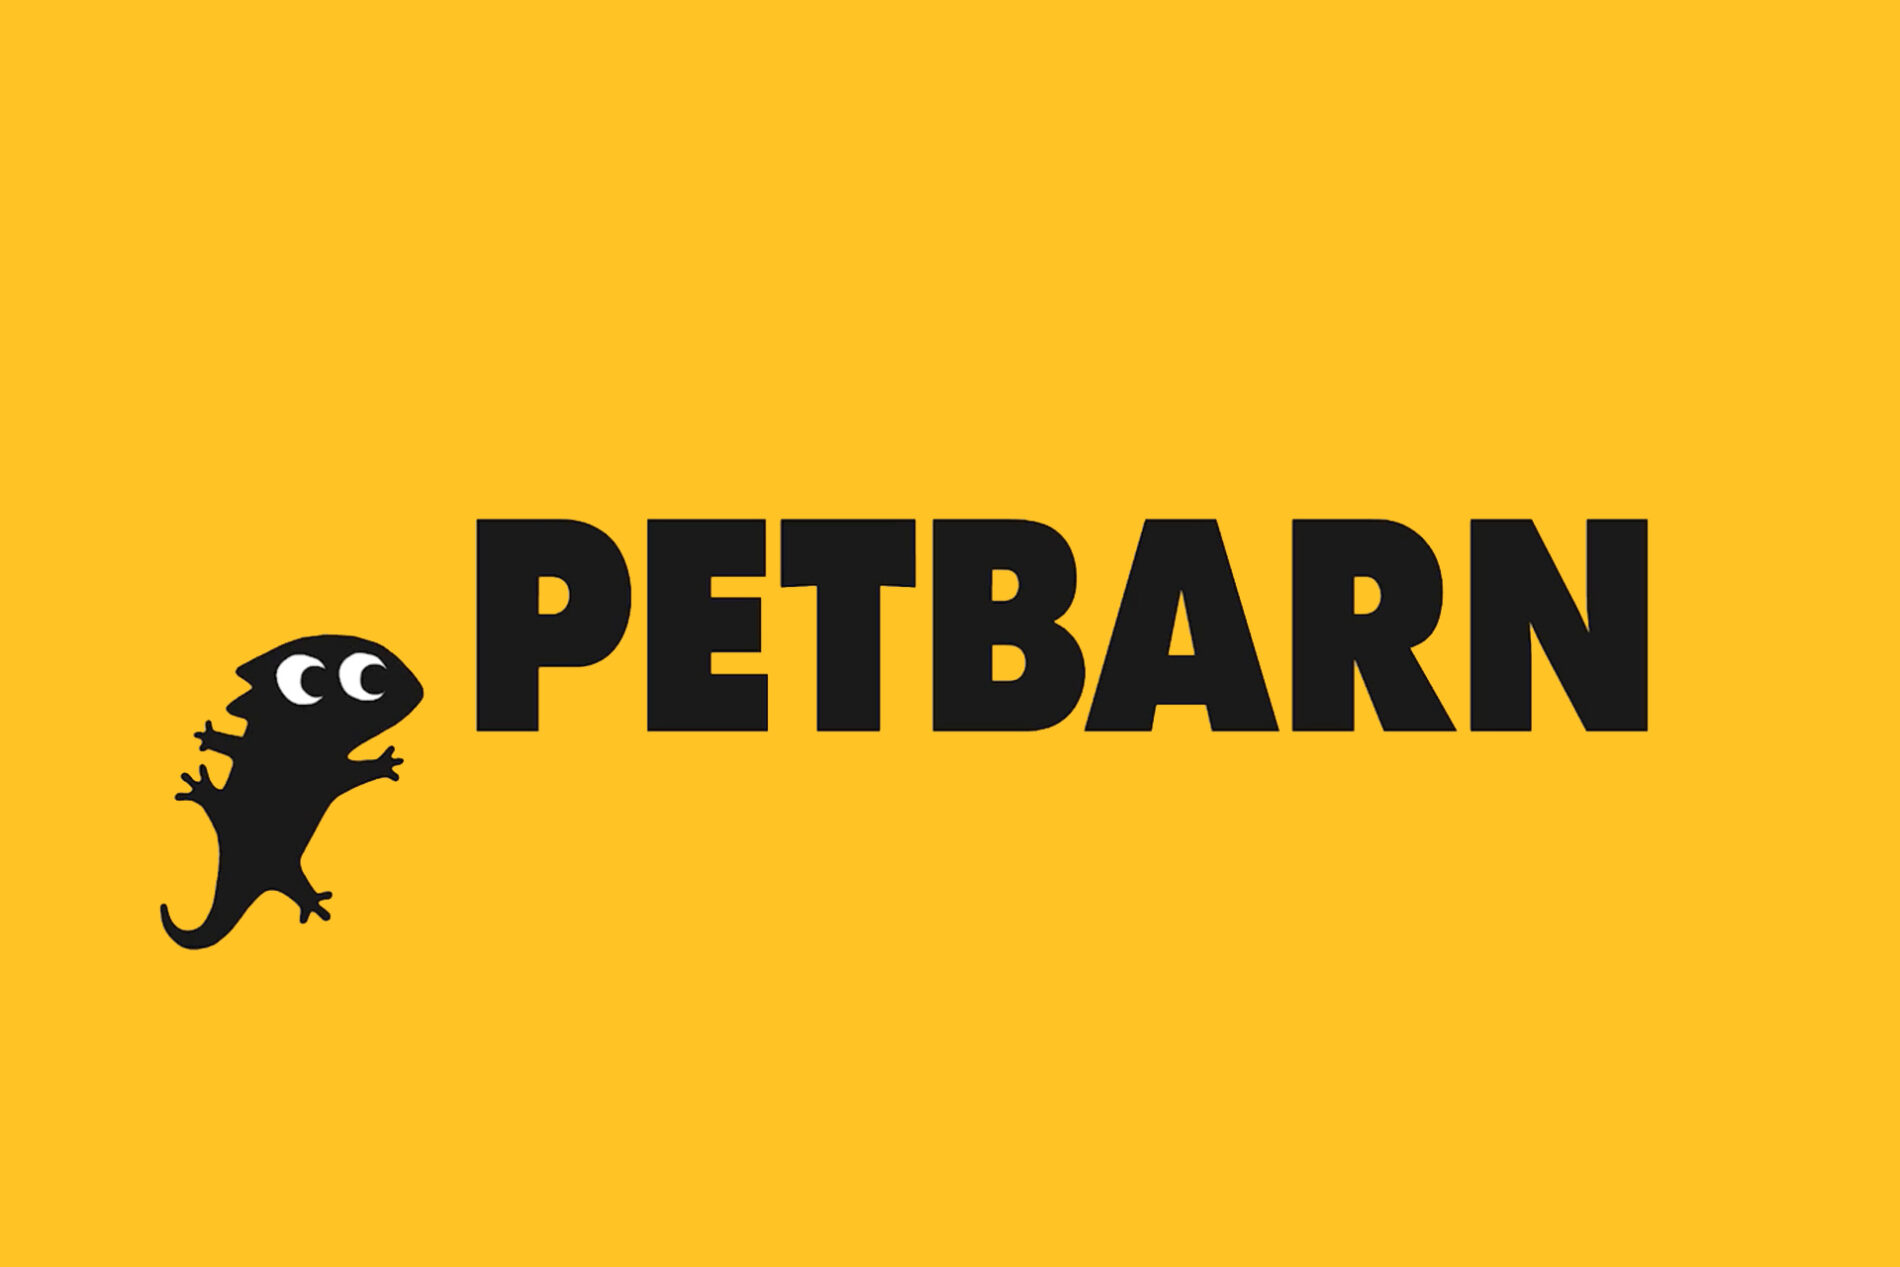 Petbarn new logo